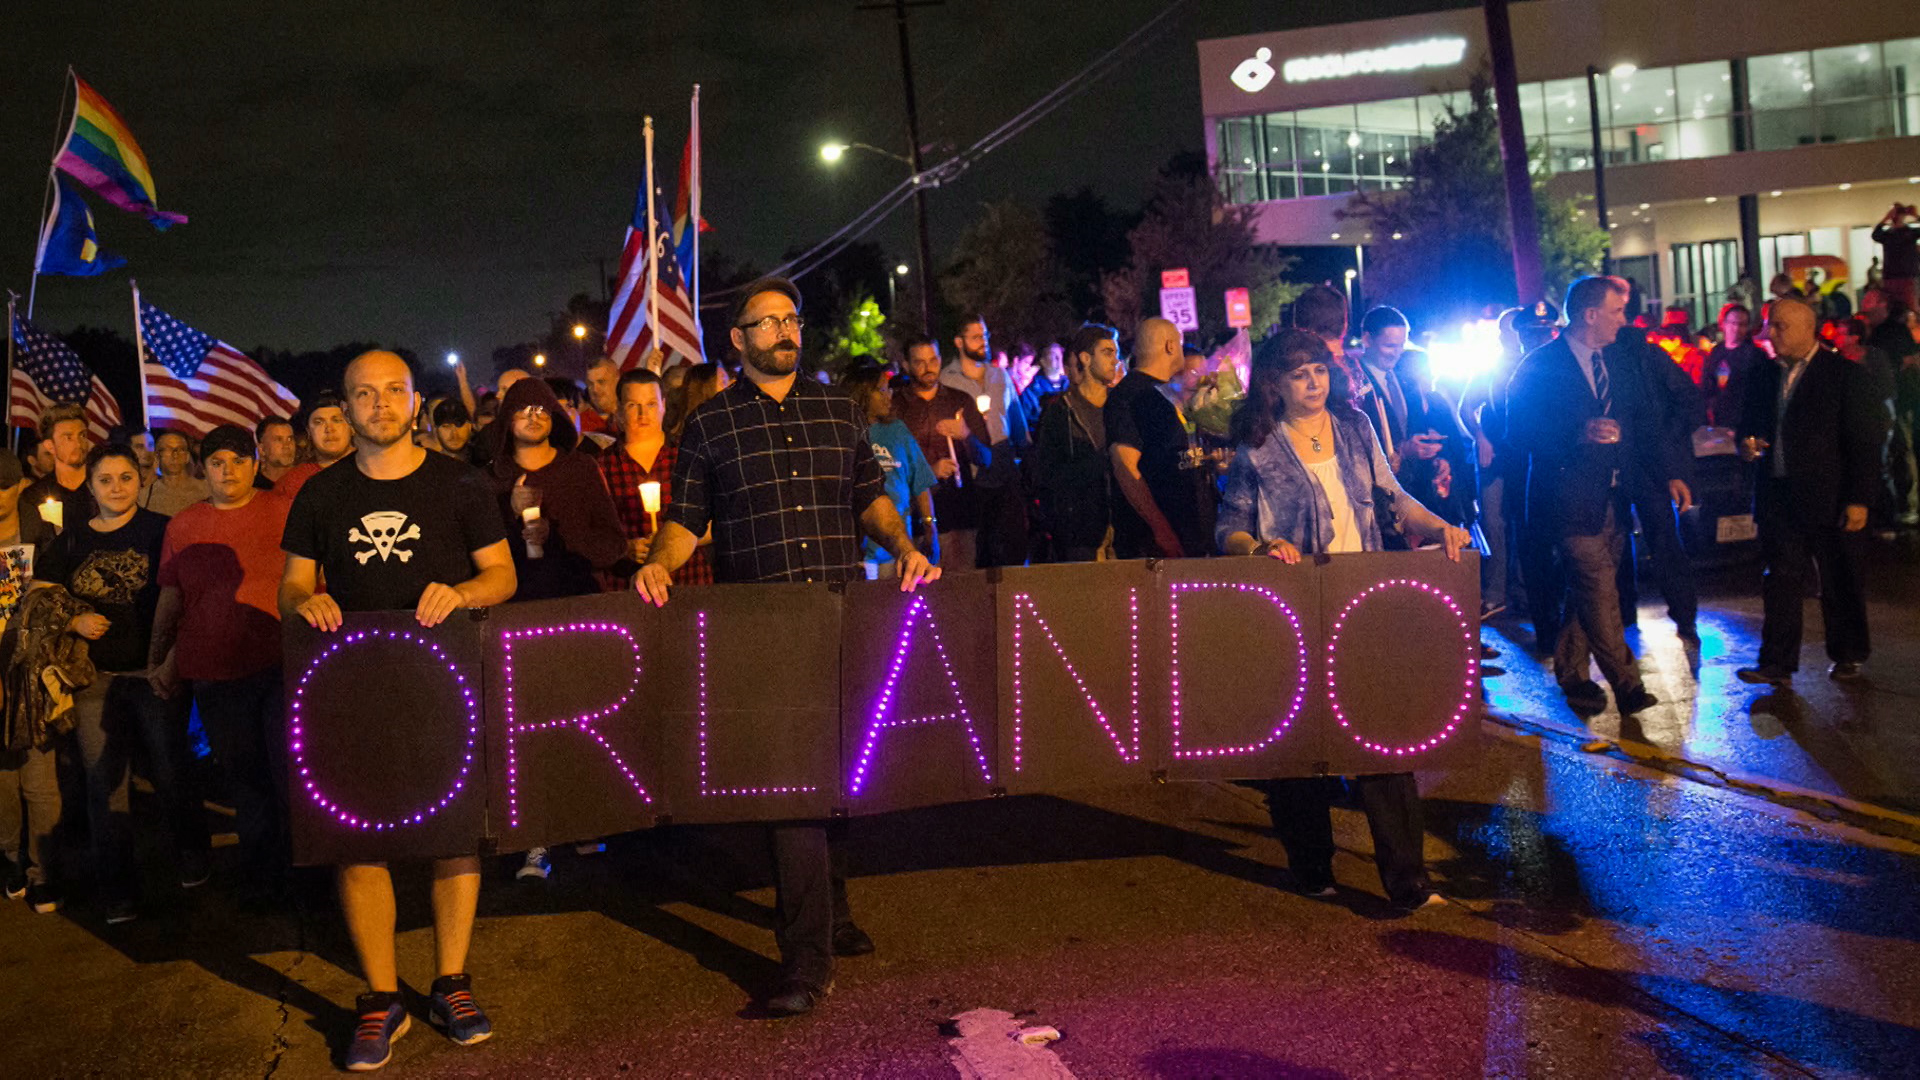 The Heat: Terror in Orlando